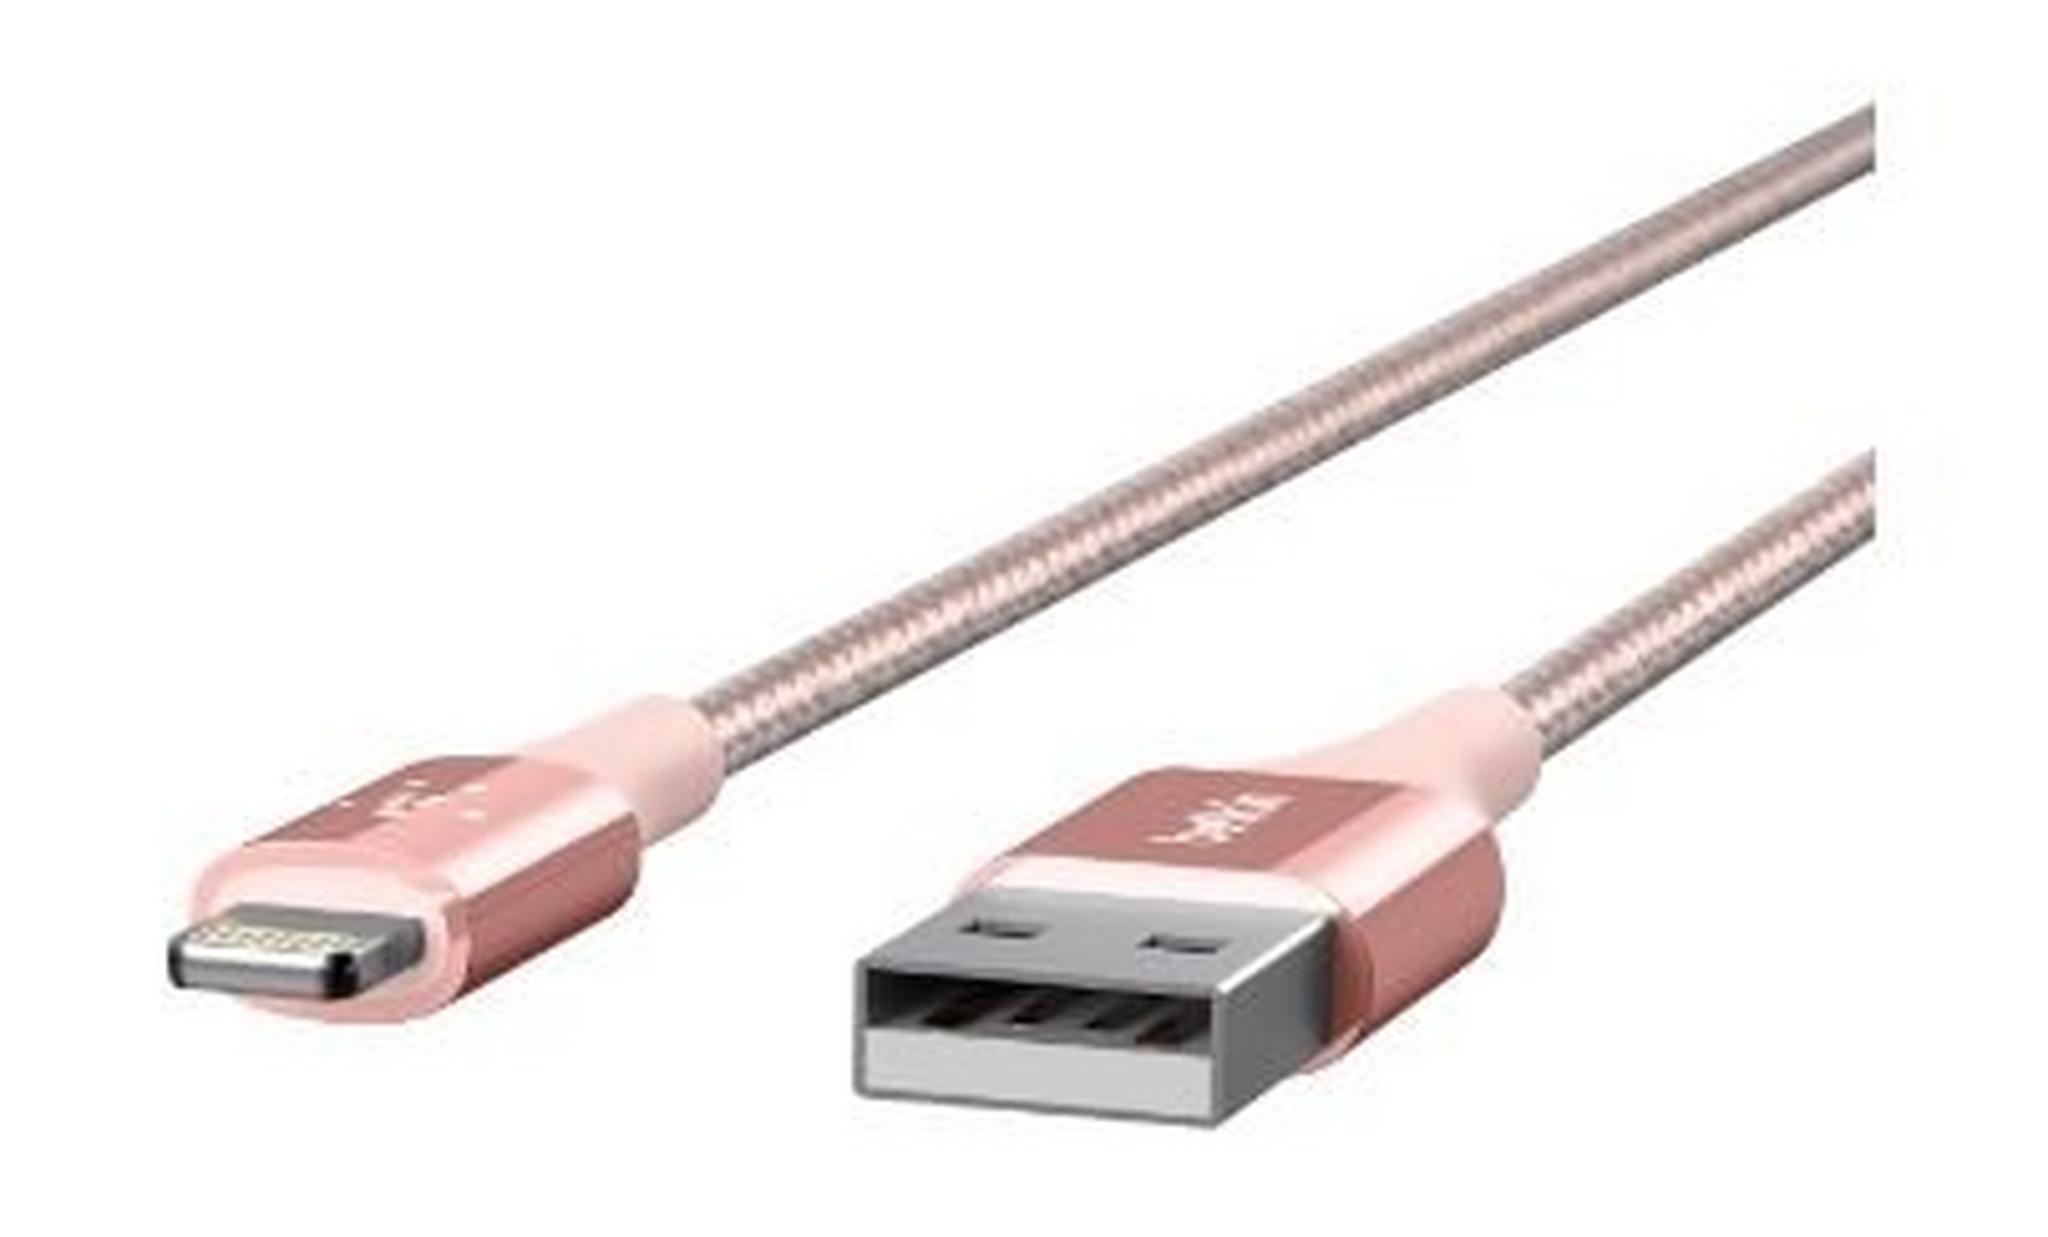 Belkin 1.2M Premium DuraTek Lightning to USB Cable - Rose Gold